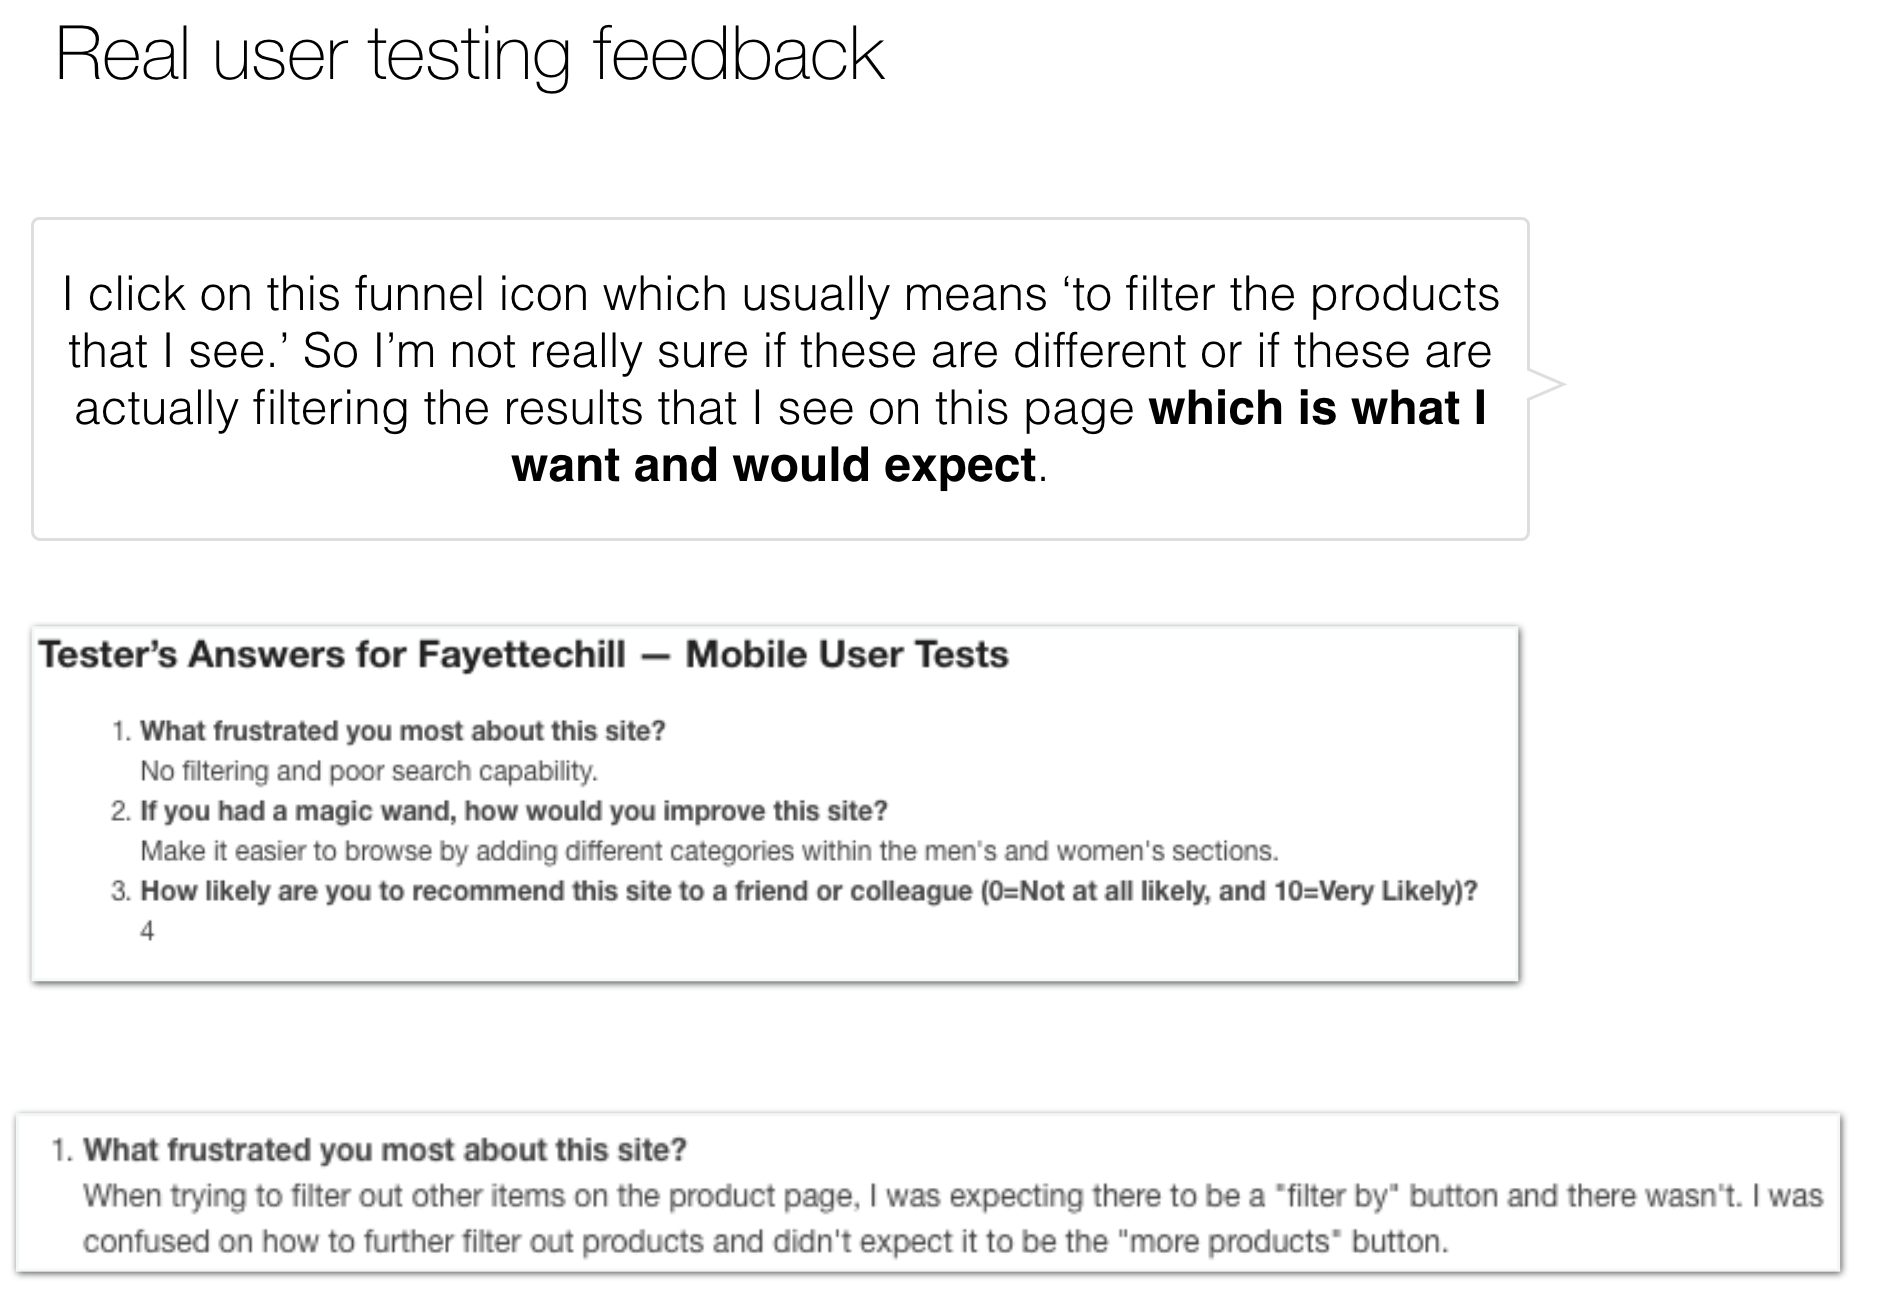 Real user testing feedback